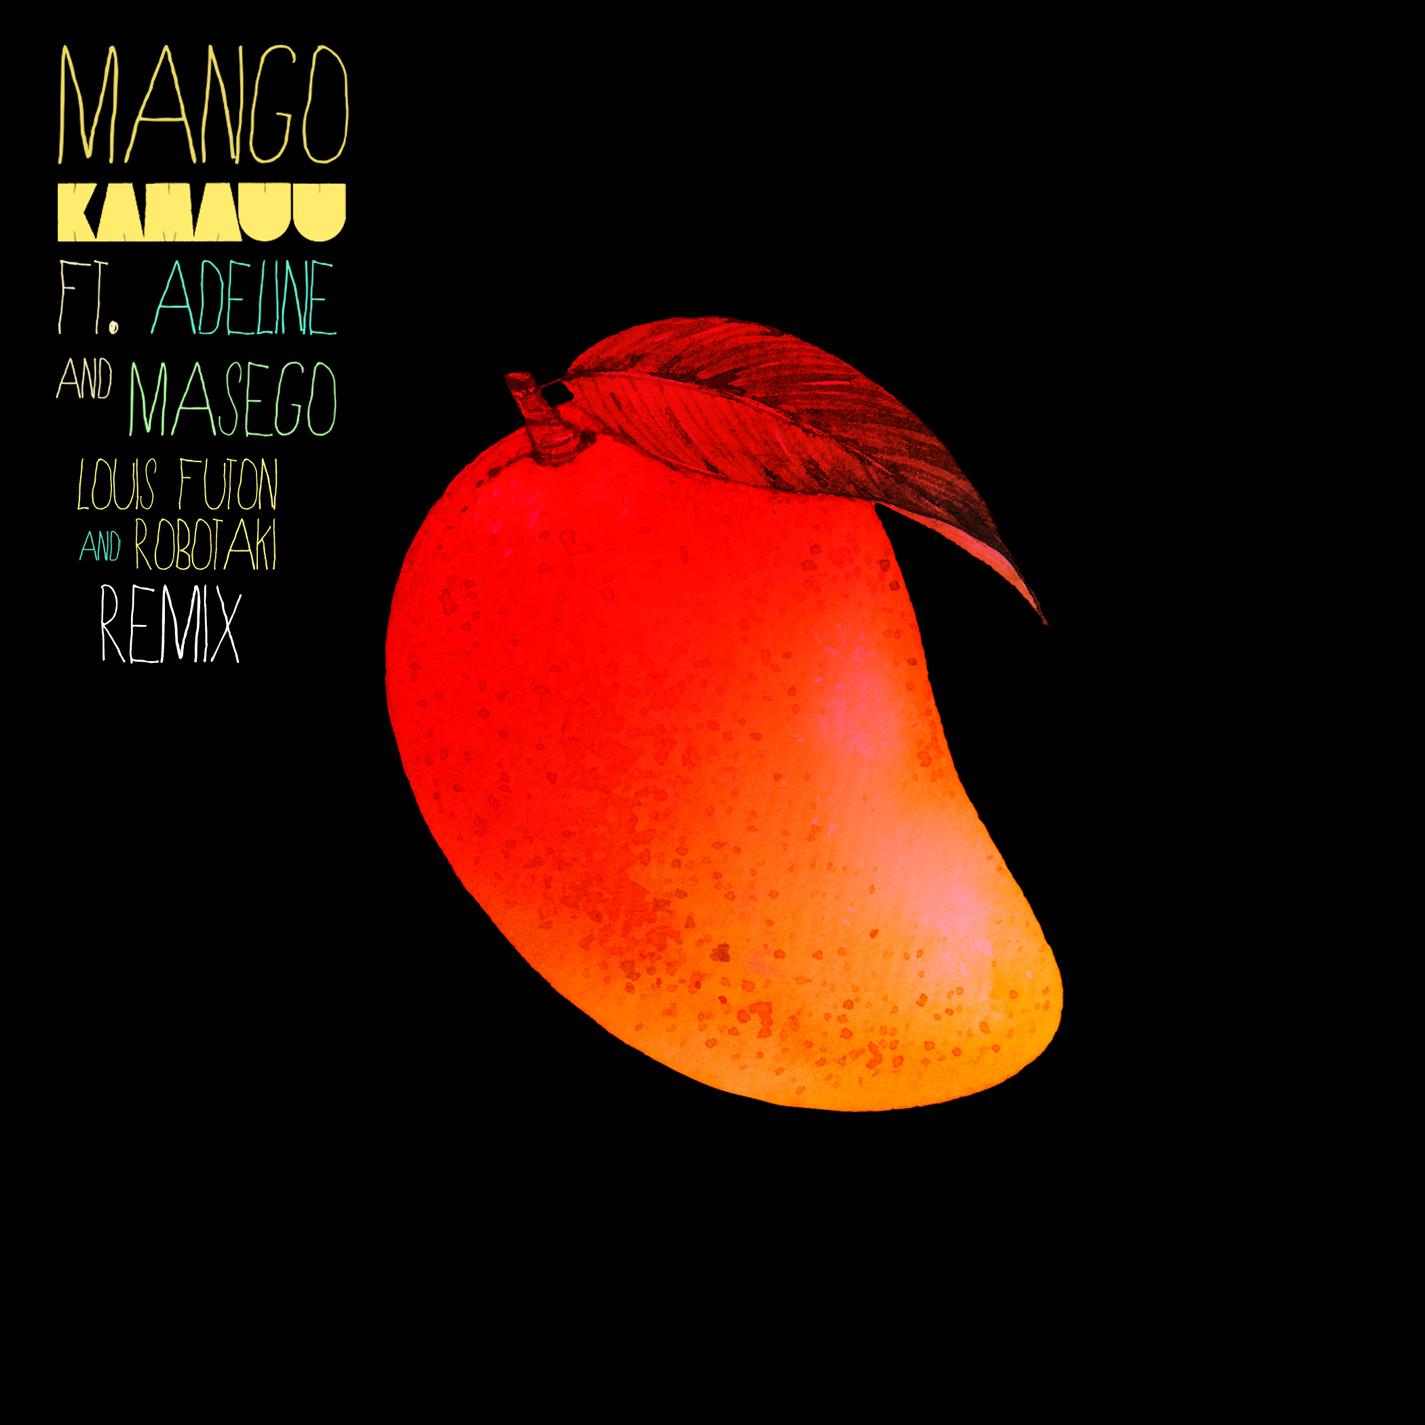 KAMAUU - MANGO (Louis Futon & Robotaki Remix) [feat. Adi Oasis & Masego]